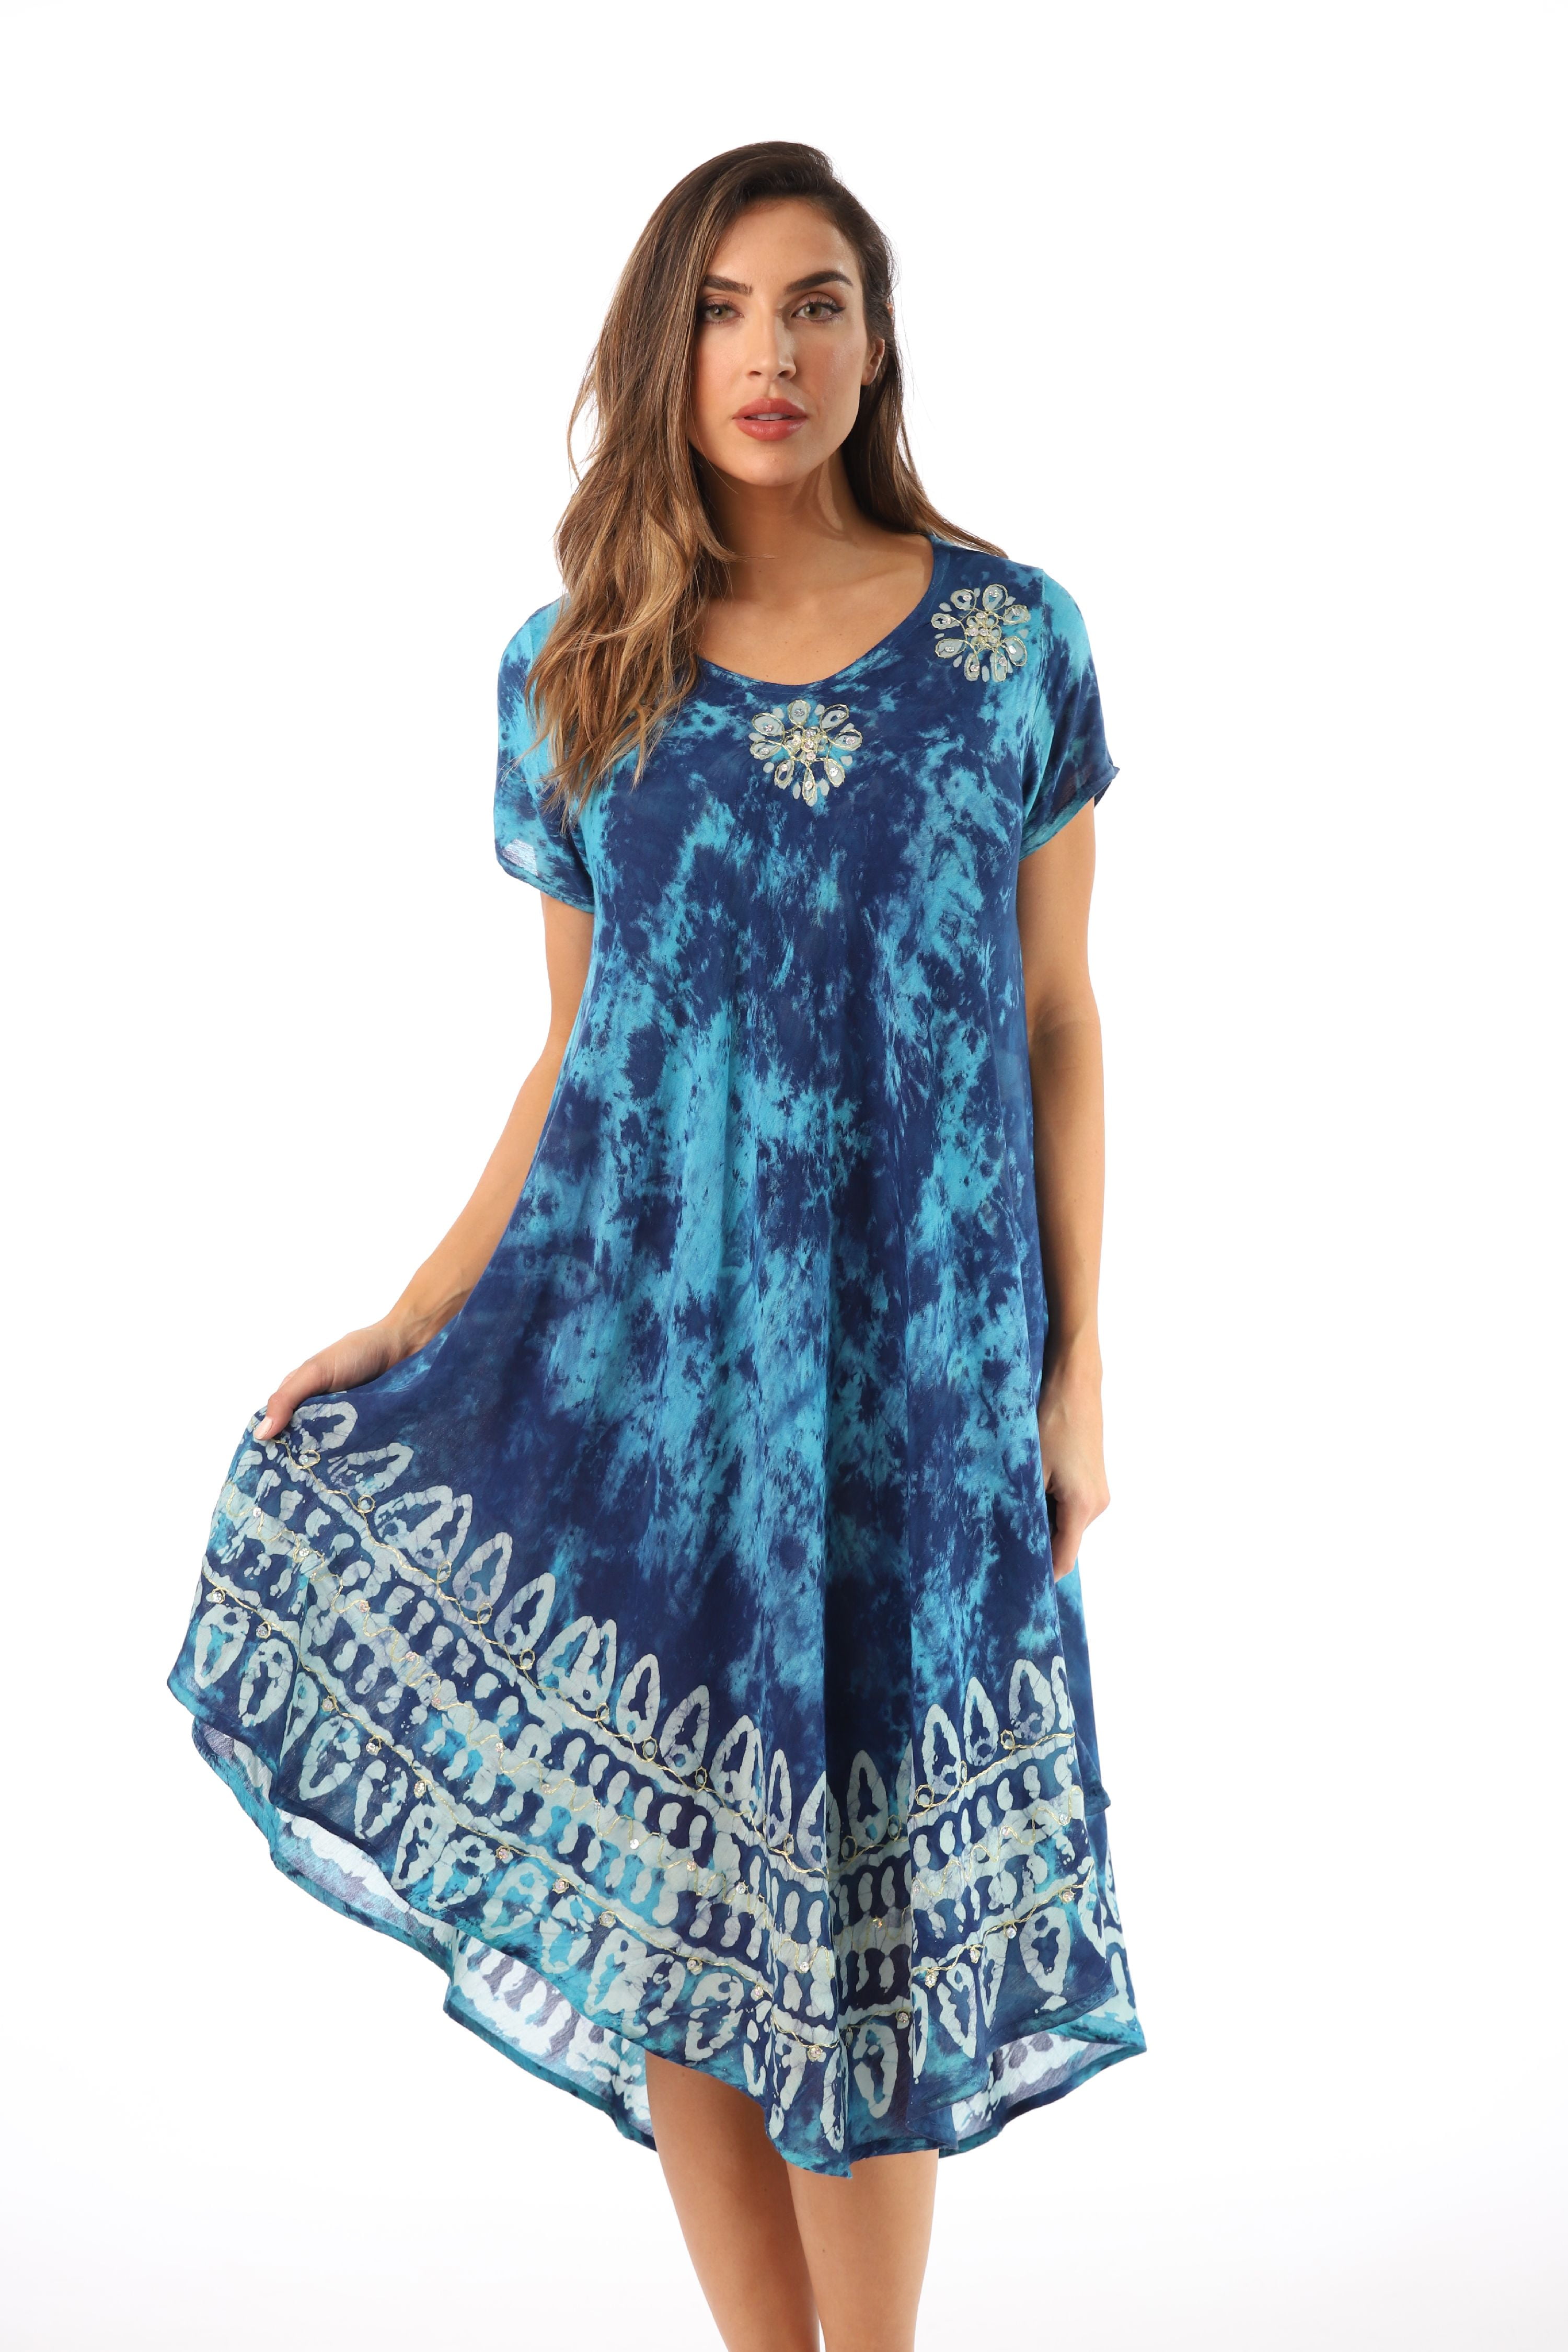 Riviera Sun Dress Dresses for Women (Turquoise / Navy, 1X) - Walmart.com